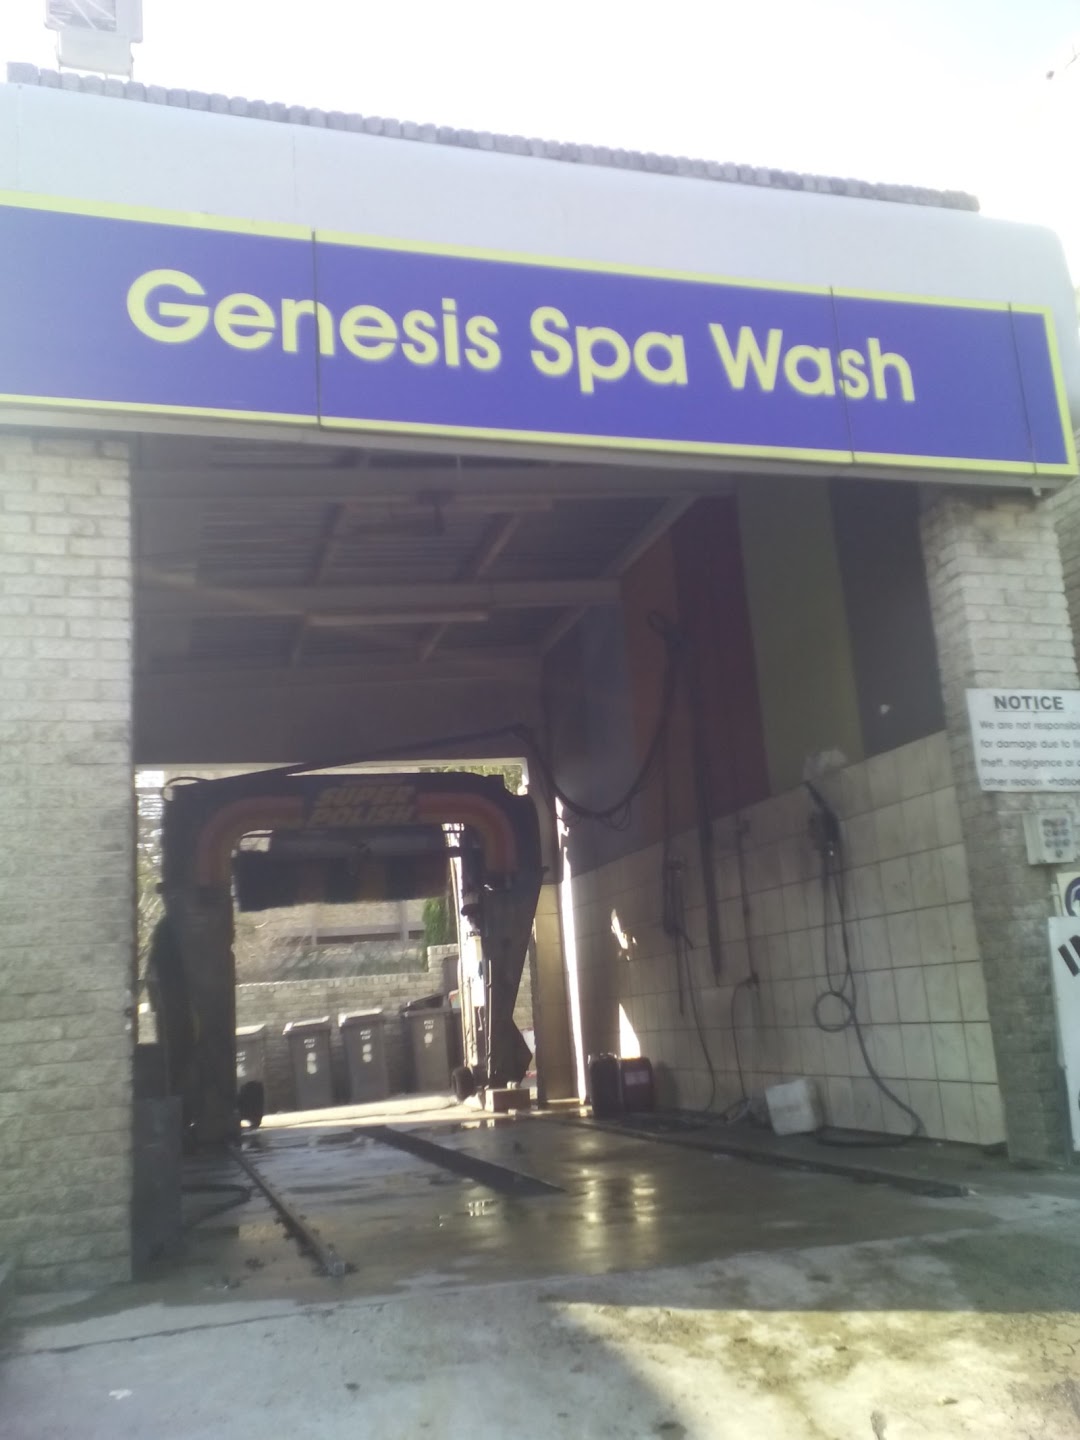 Genesis Spa Wash